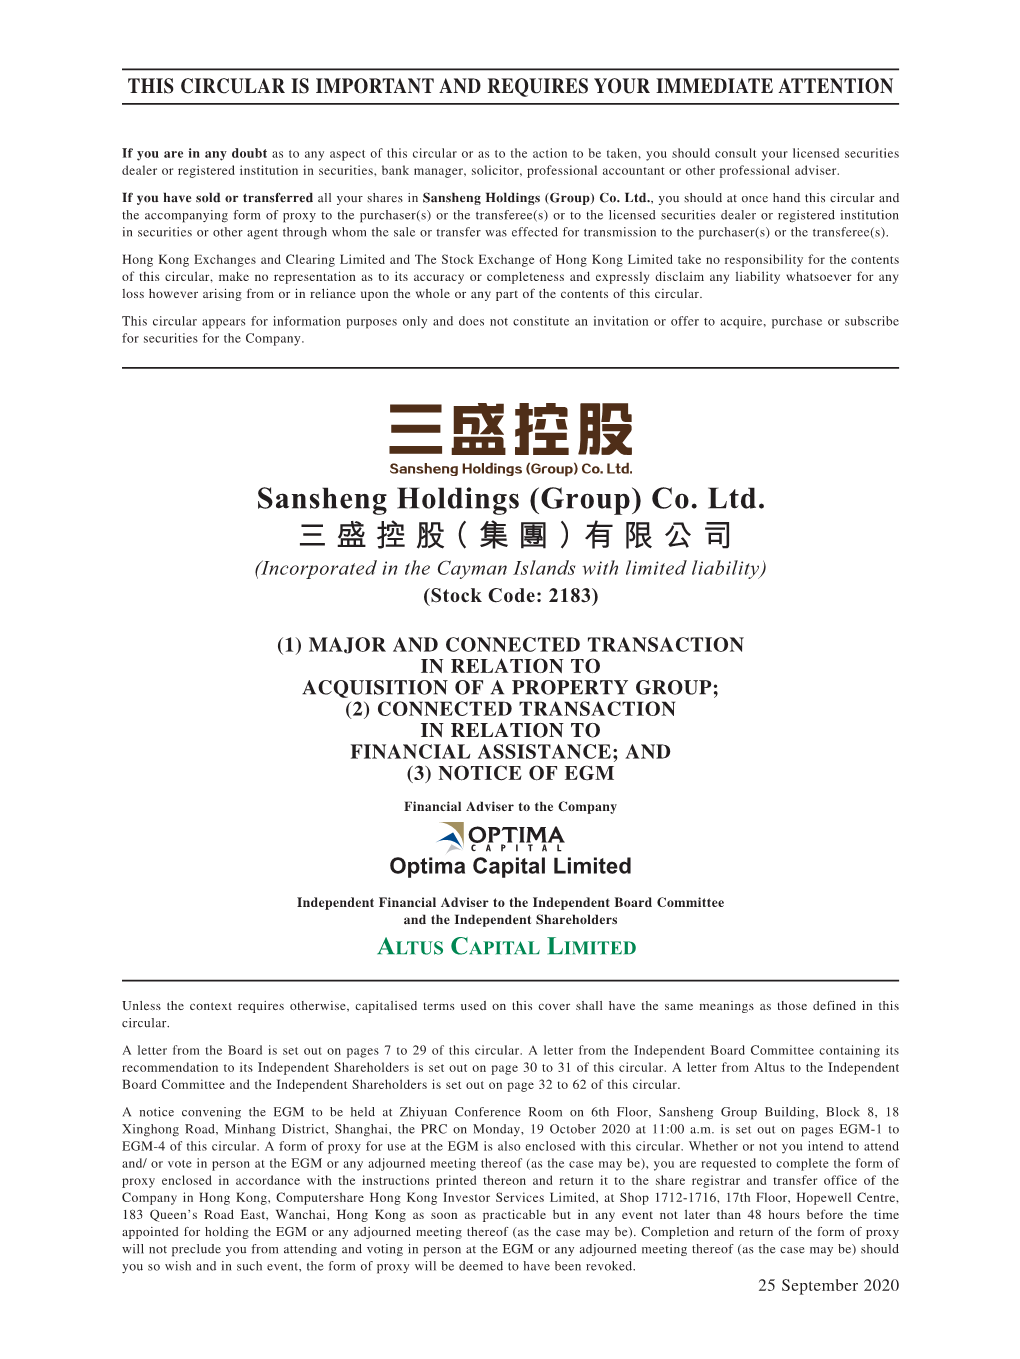 Sansheng Holdings (Group) Co